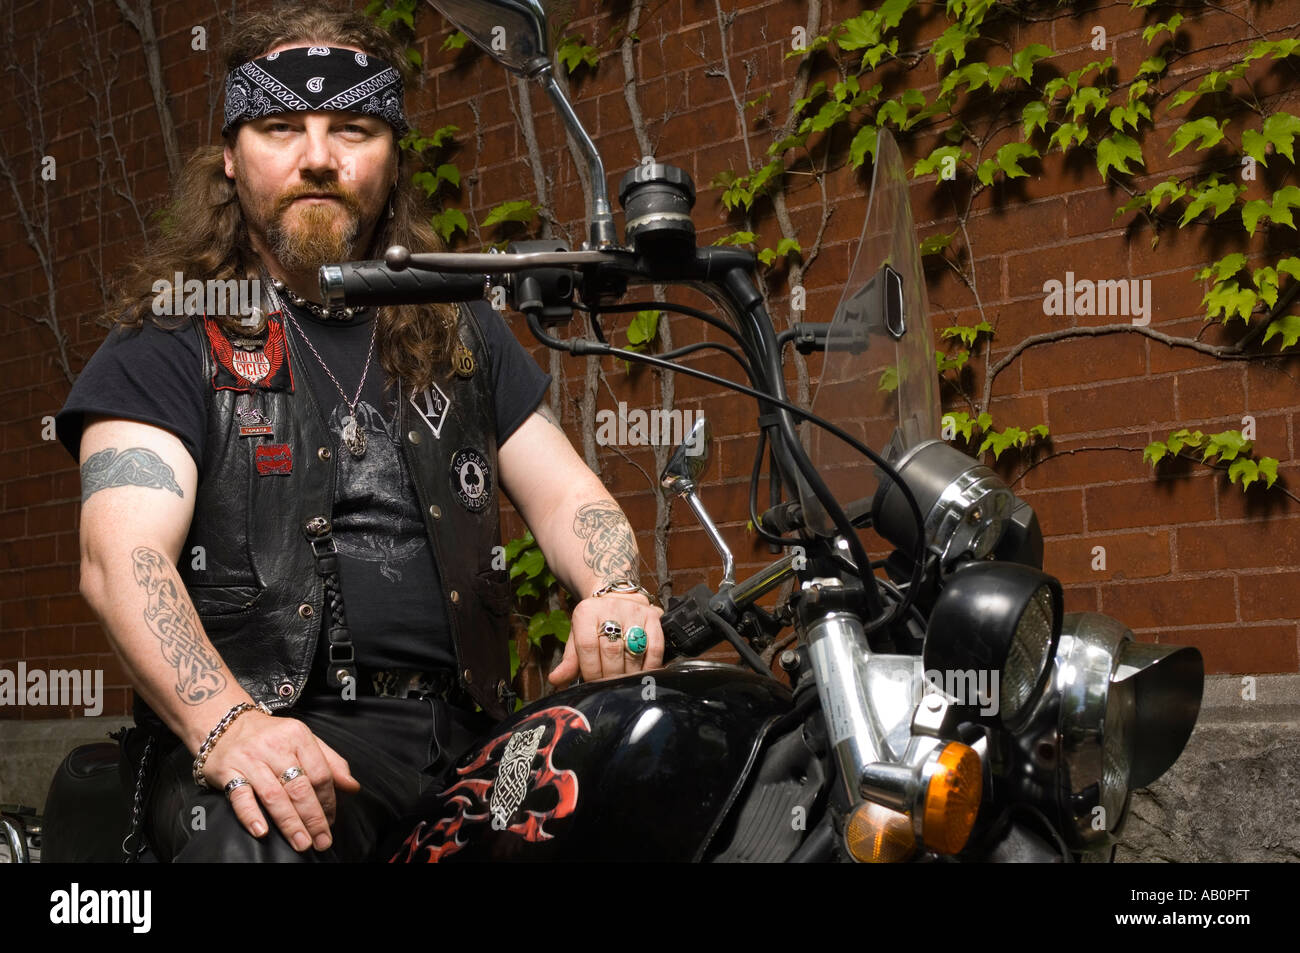 Cool biker with bandana Stock Photo